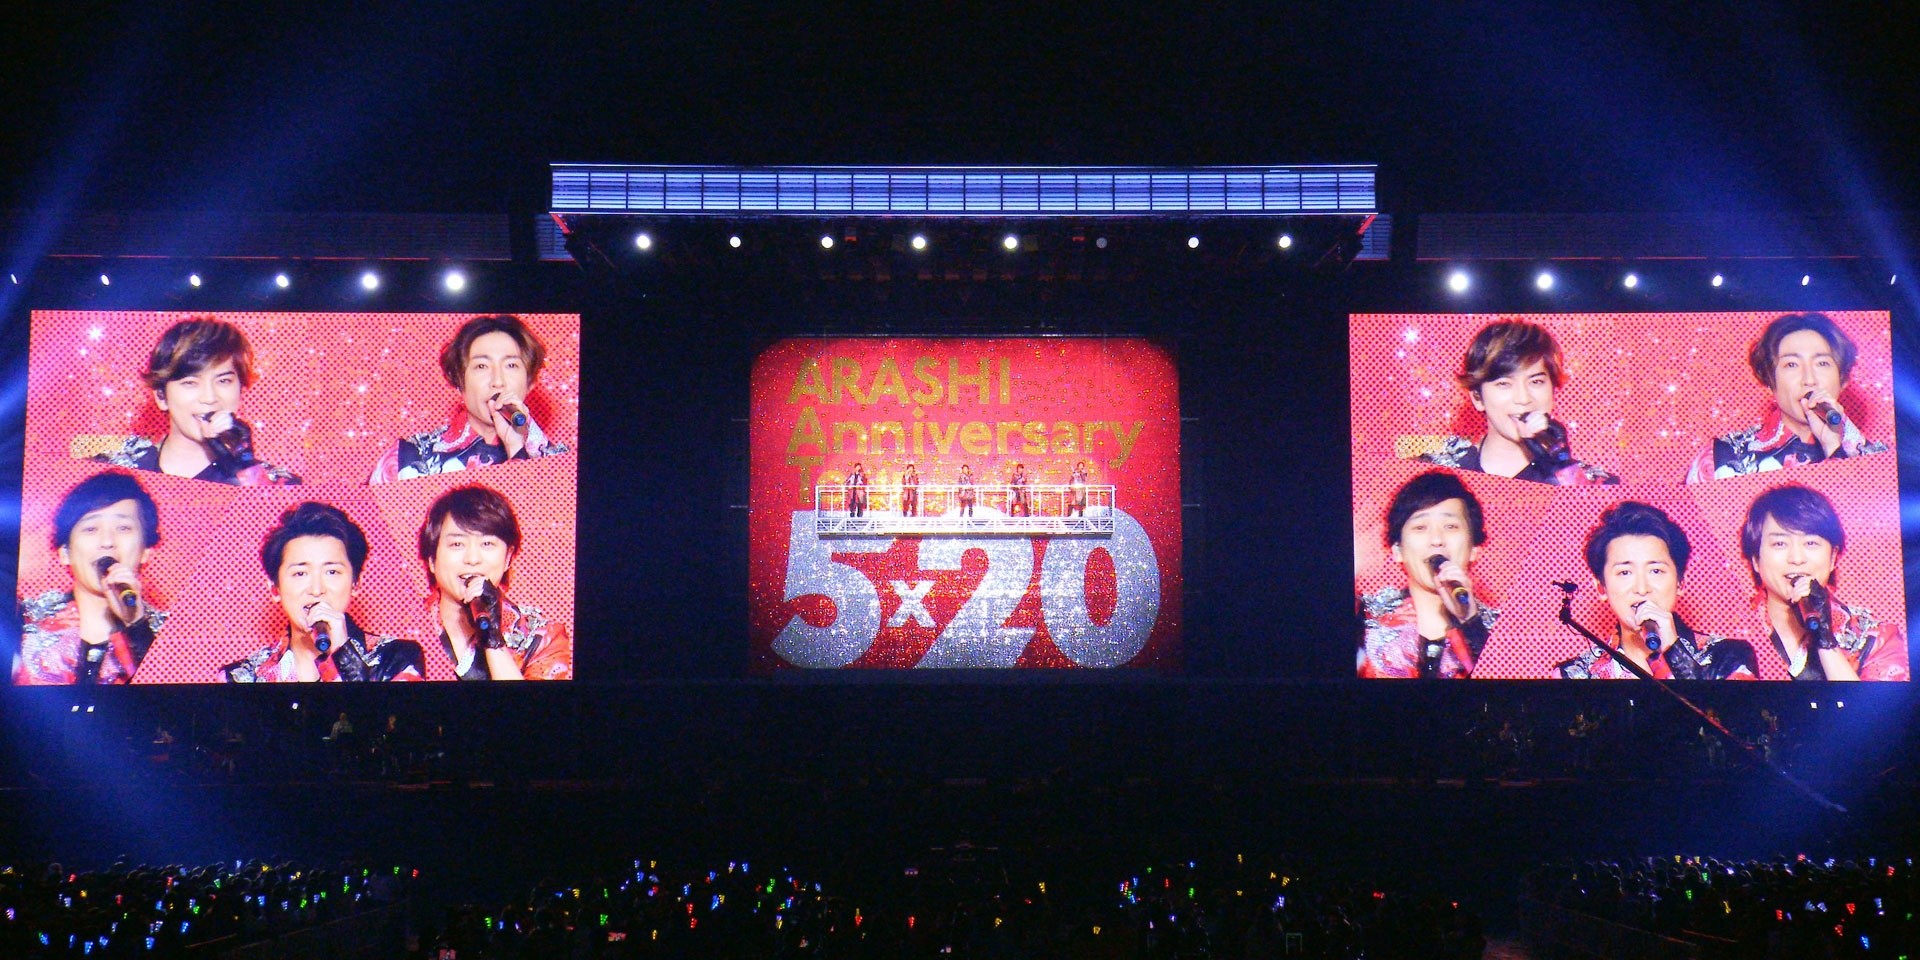 ARASHI's Anniversary Tour 5 × 20 FILM 'Record of Memories' is coming